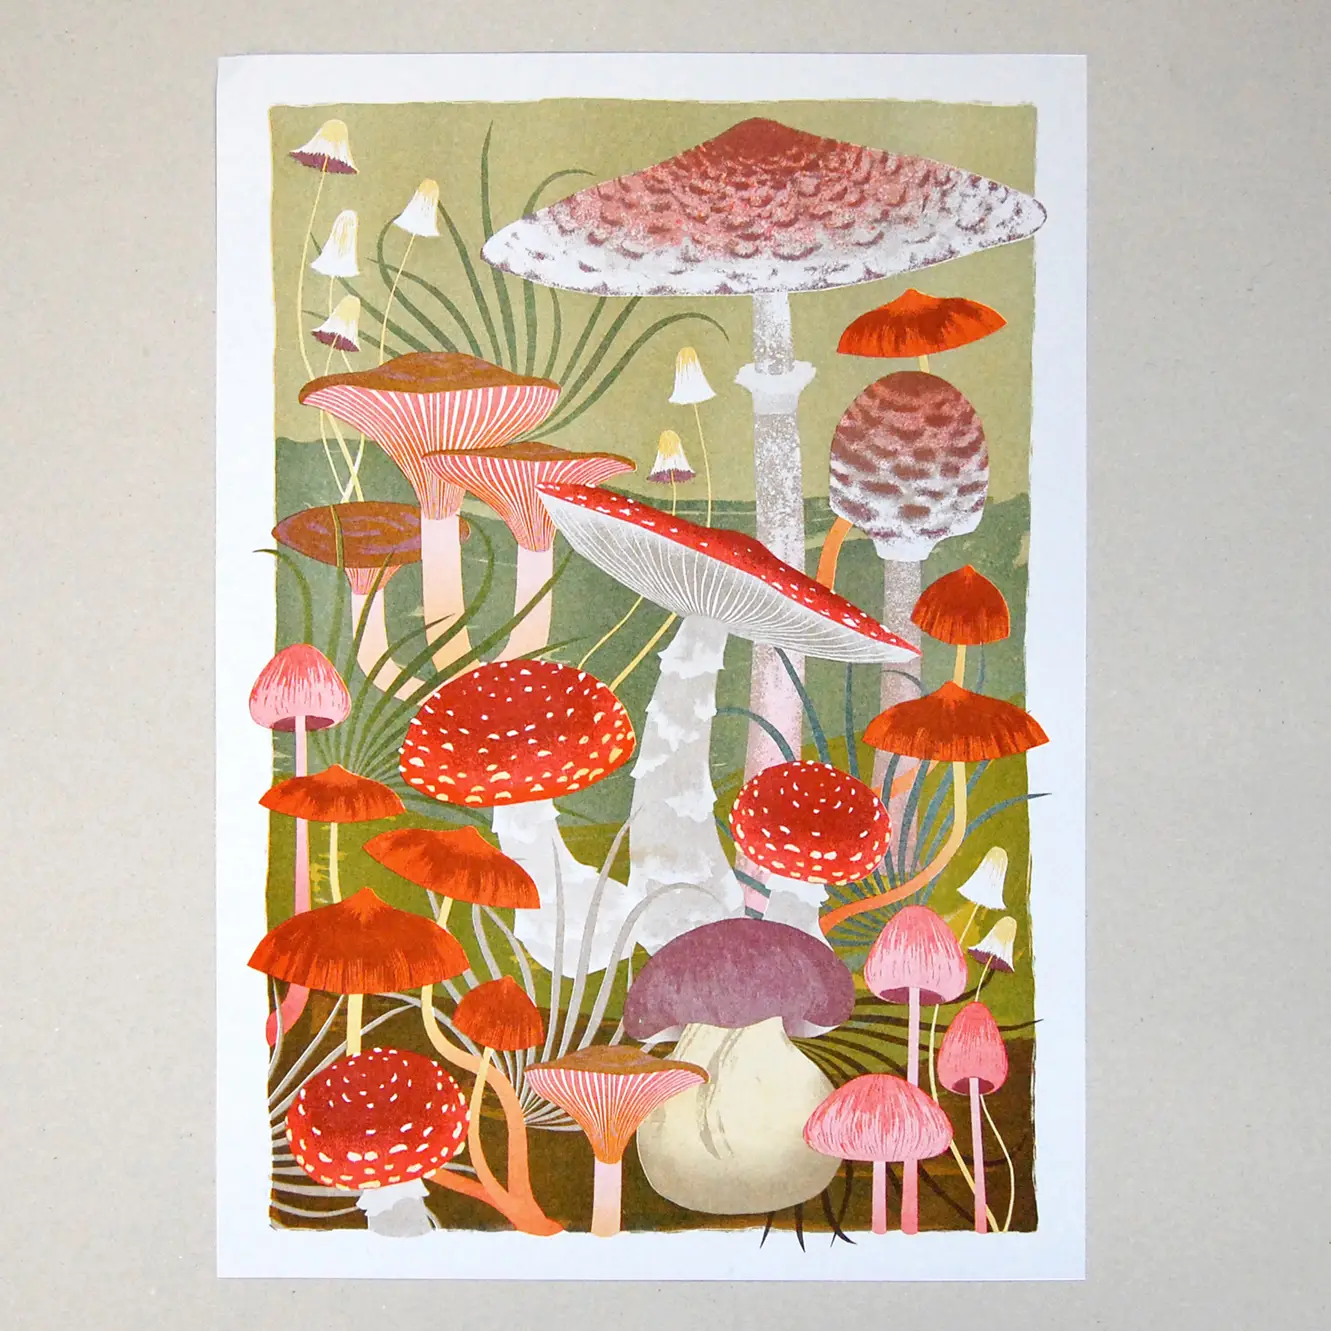 Fungi, risograph print